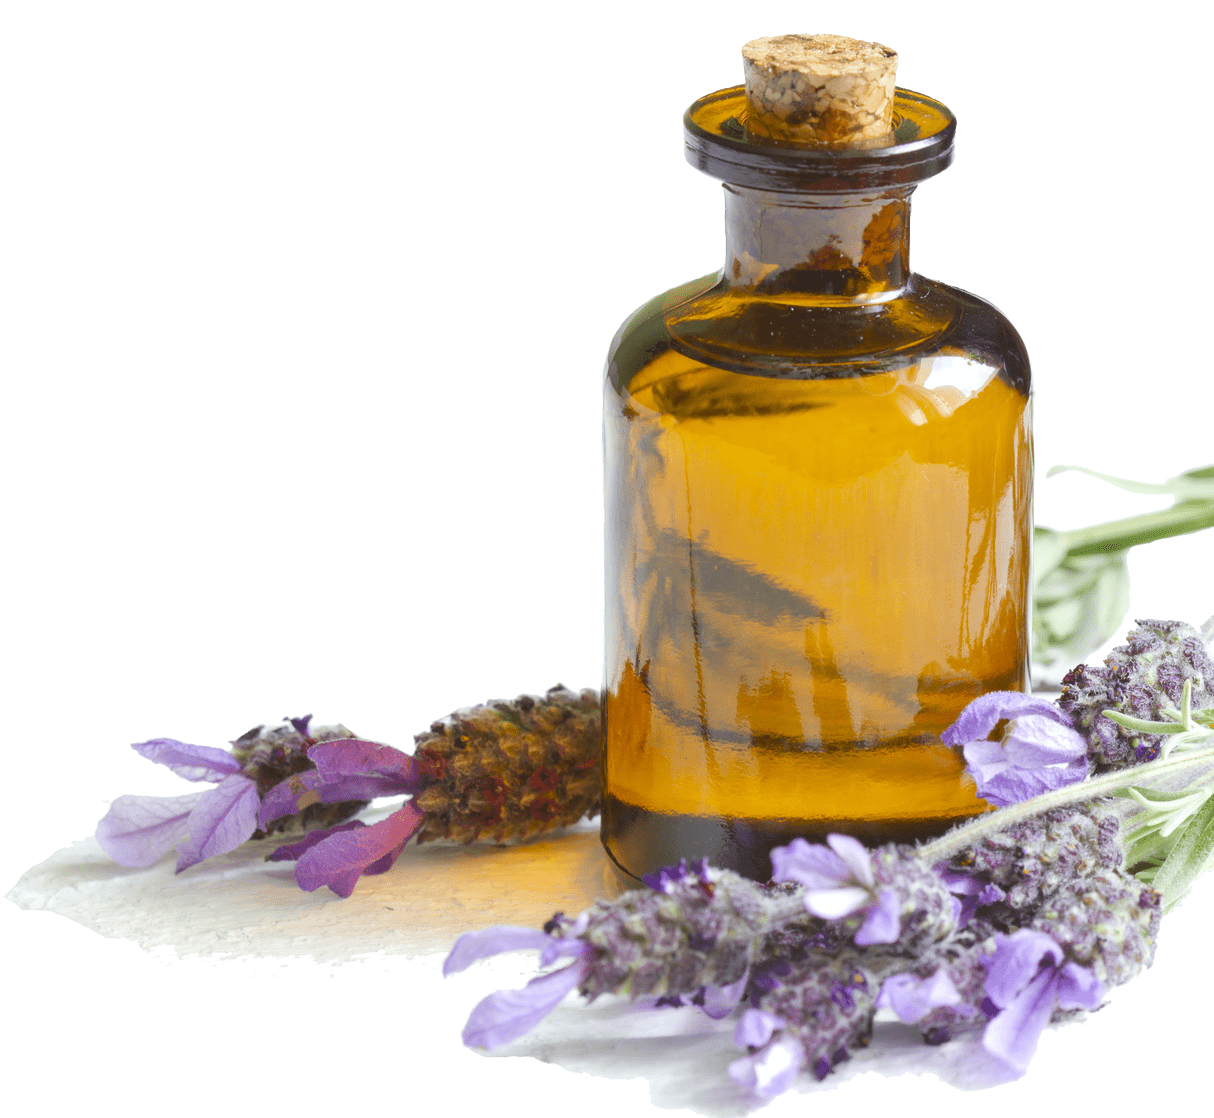 Oils aromatherapy printglobe diffuser essentials put